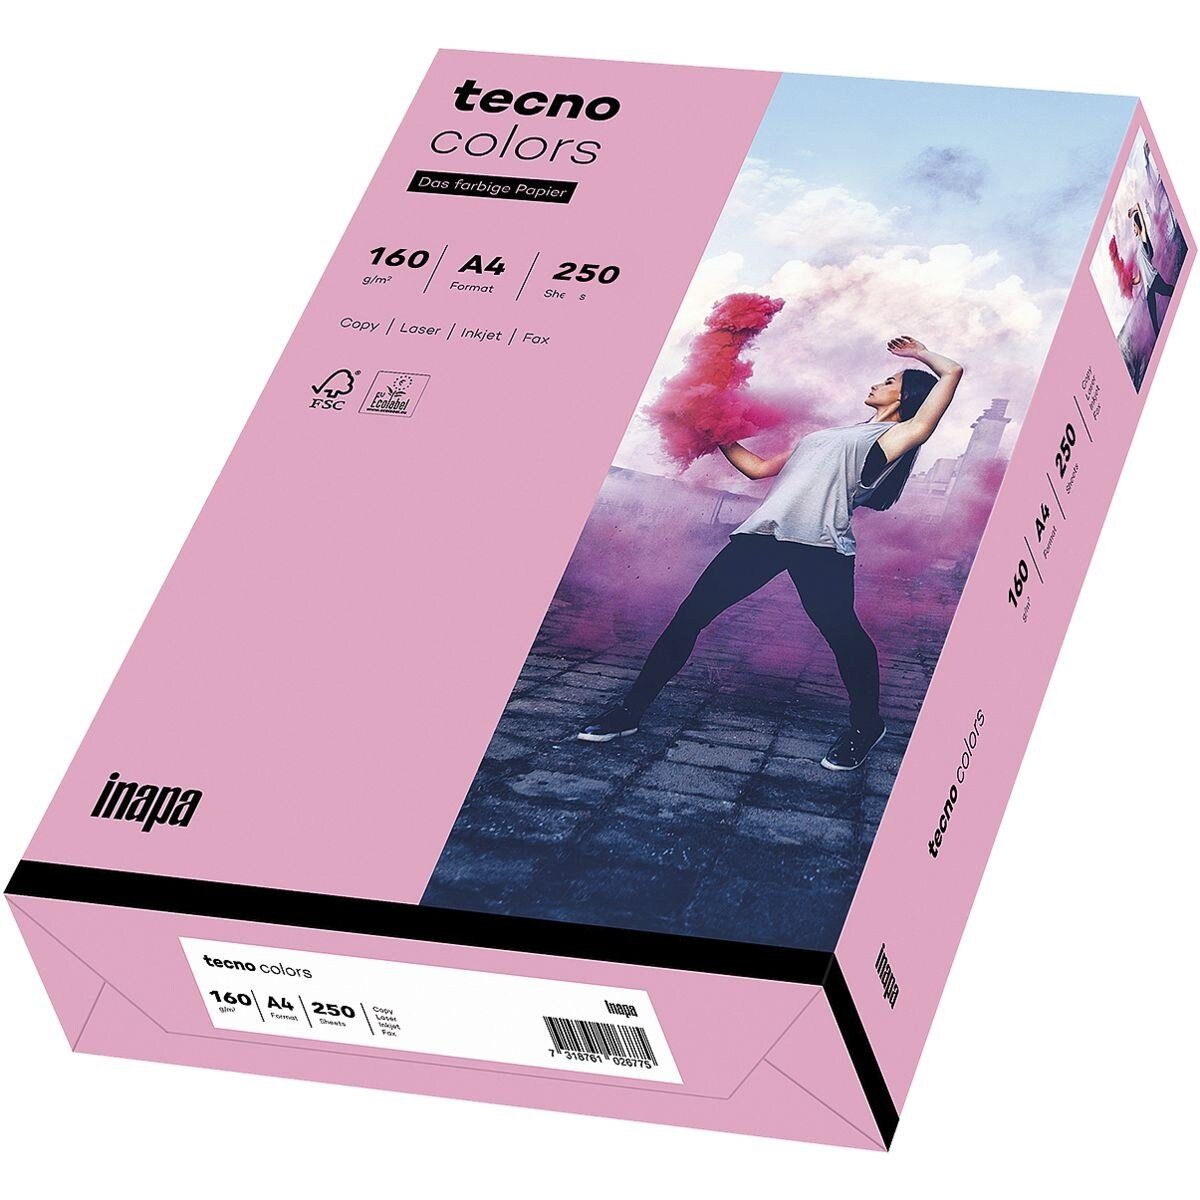 Inapa tecno Drucker- und Kopierpapier Rainbow / tecno Colors, Pastellfarben, Format DIN A4, 160 g/m², 250 Blatt rosa